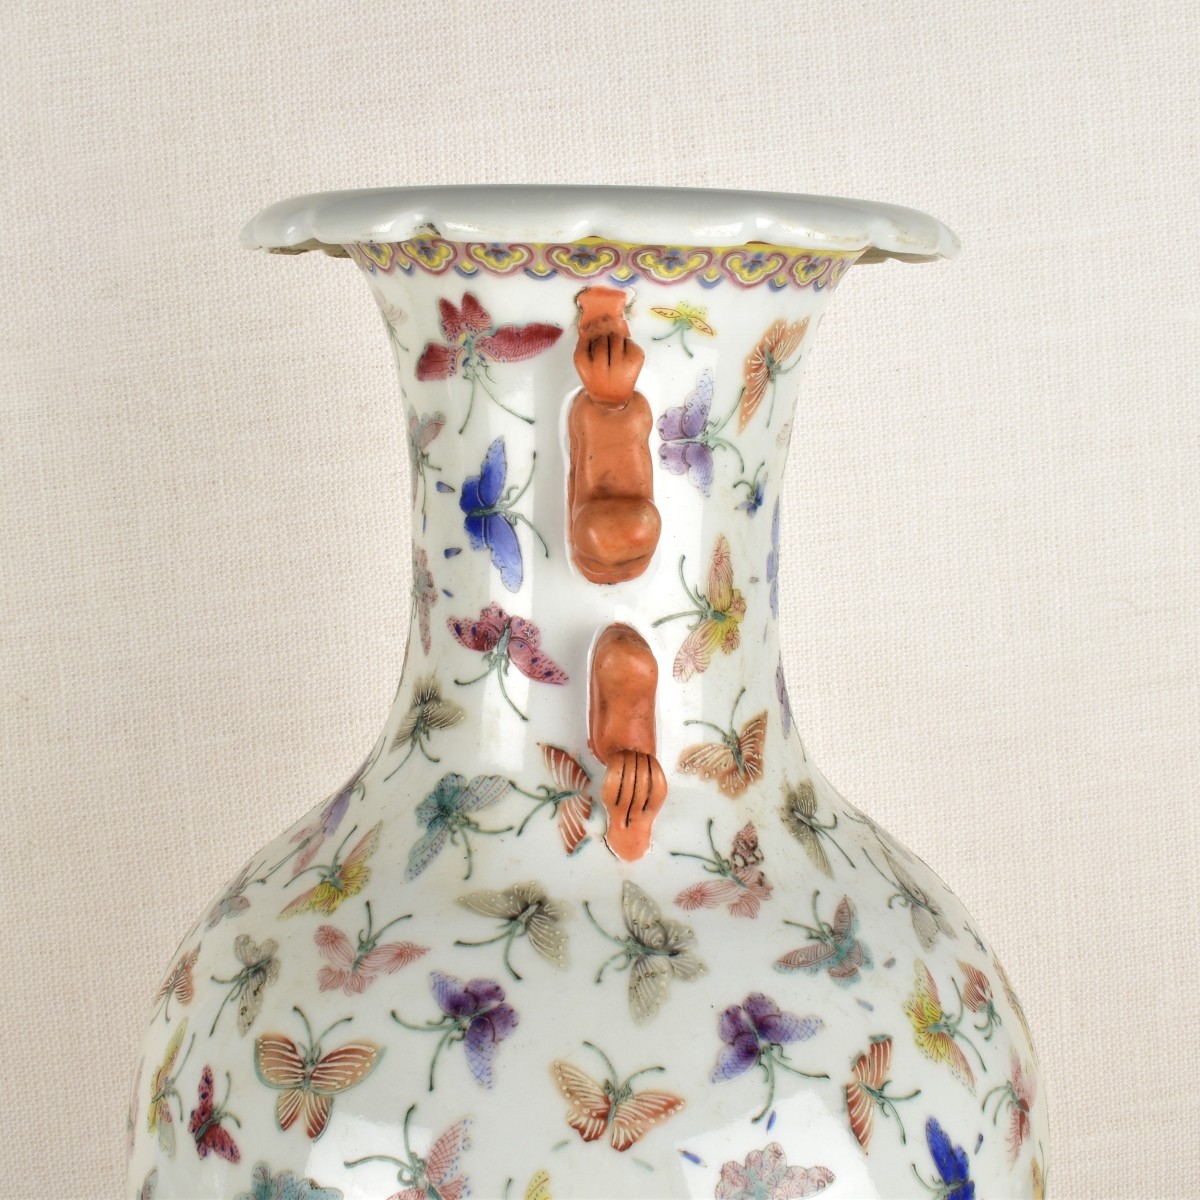 Large Chinese Vases